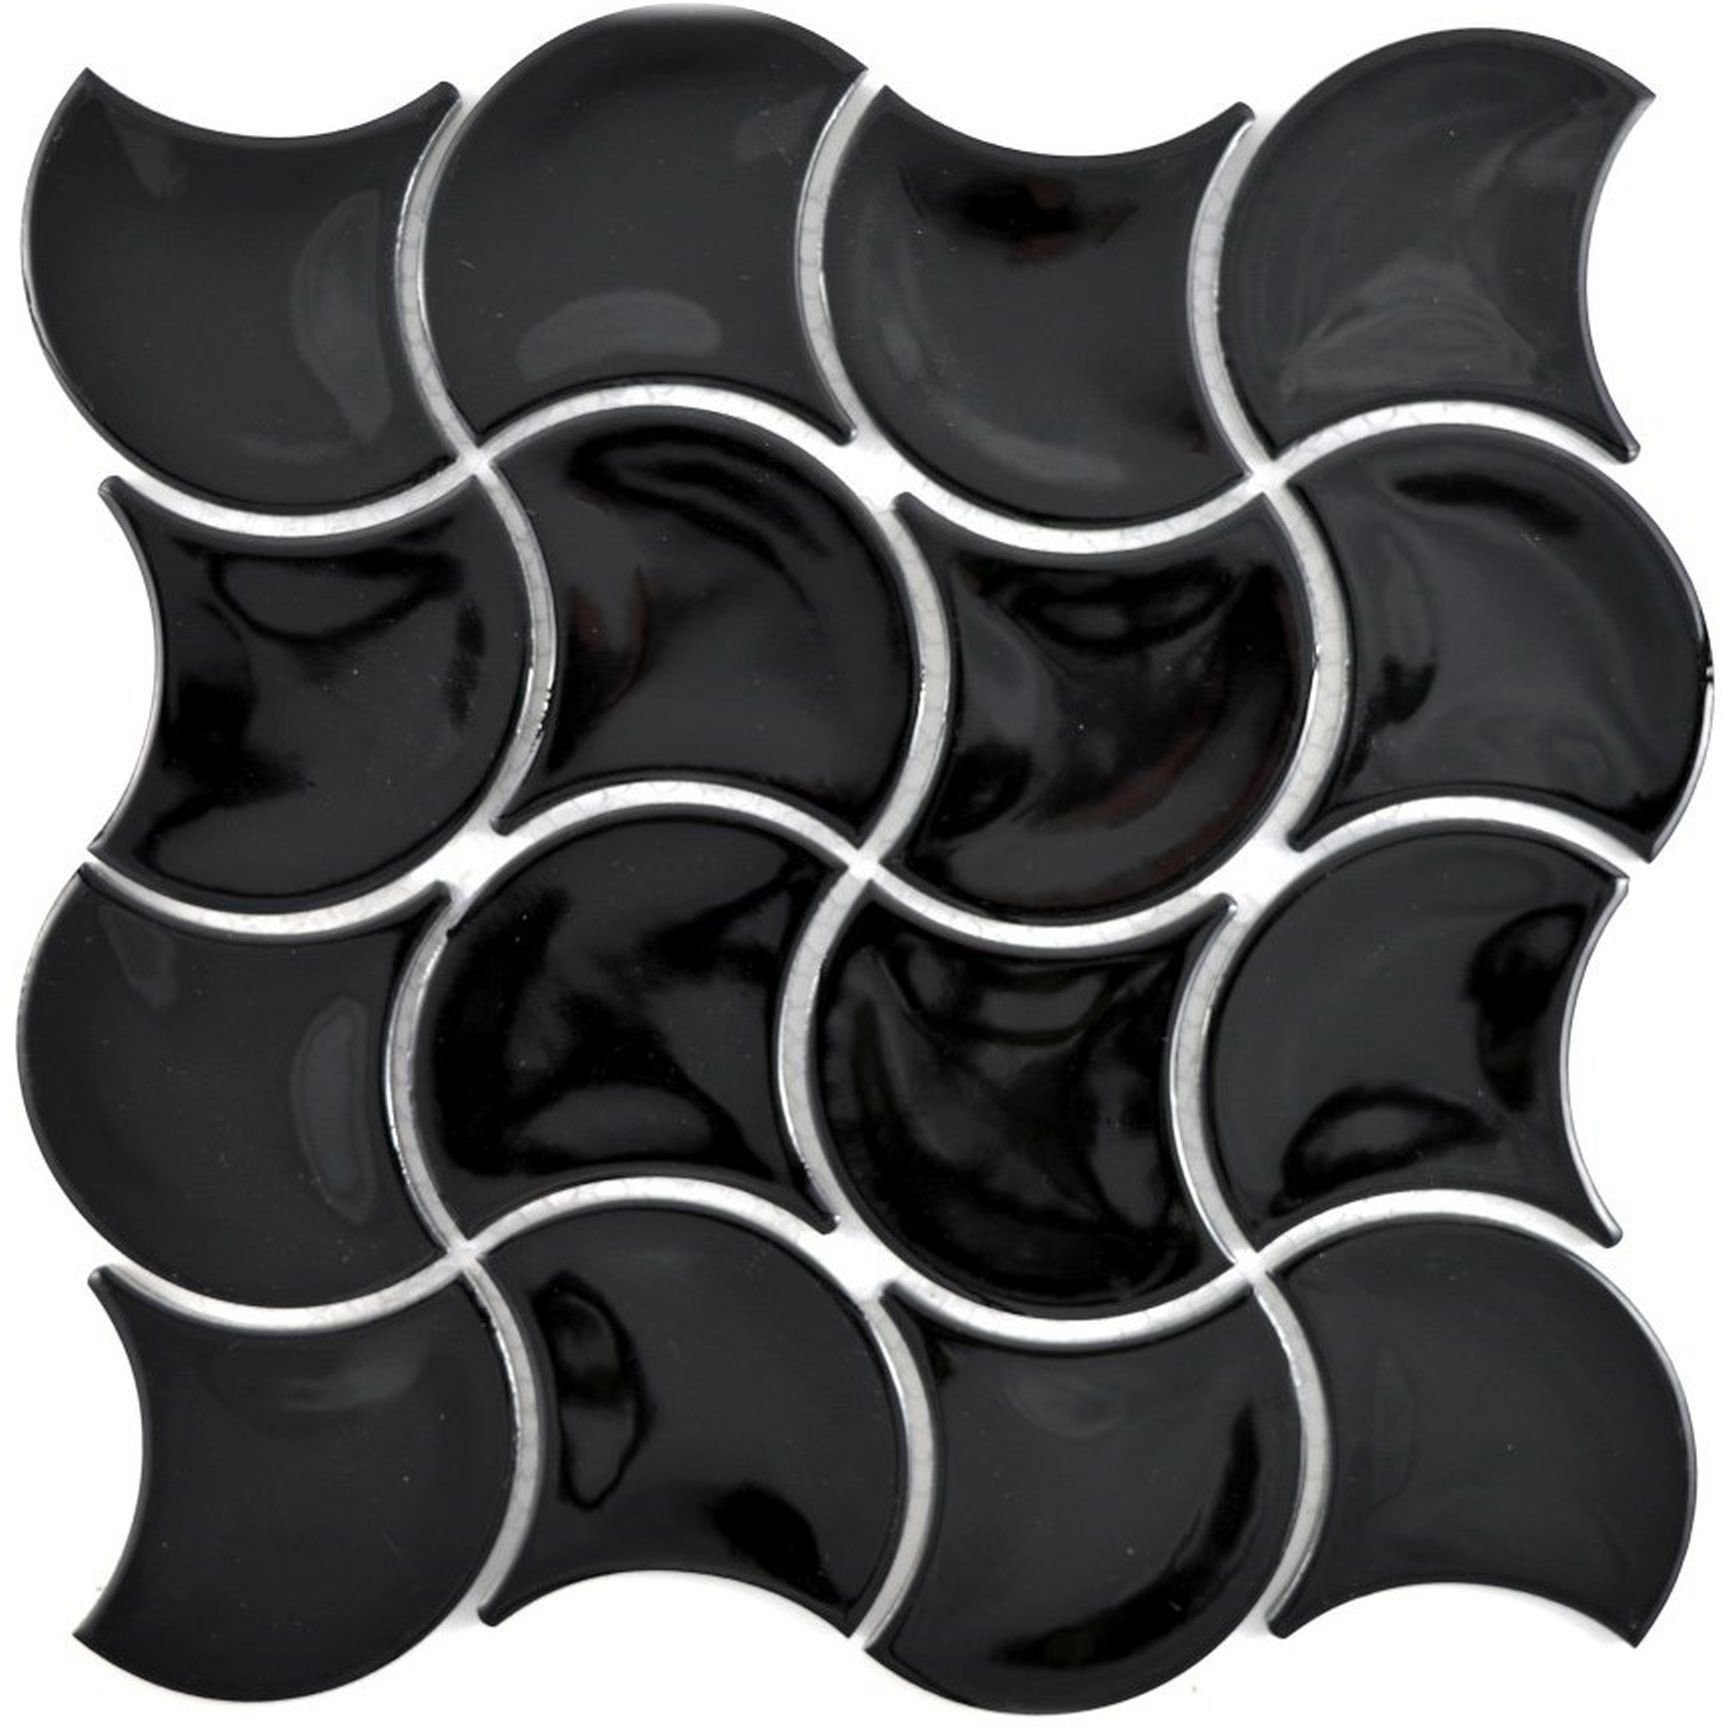 / Mosani Mosaikfliesen 10 glänzend Mosaikfliesen Fächer schwarz Matten Keramikmosaik